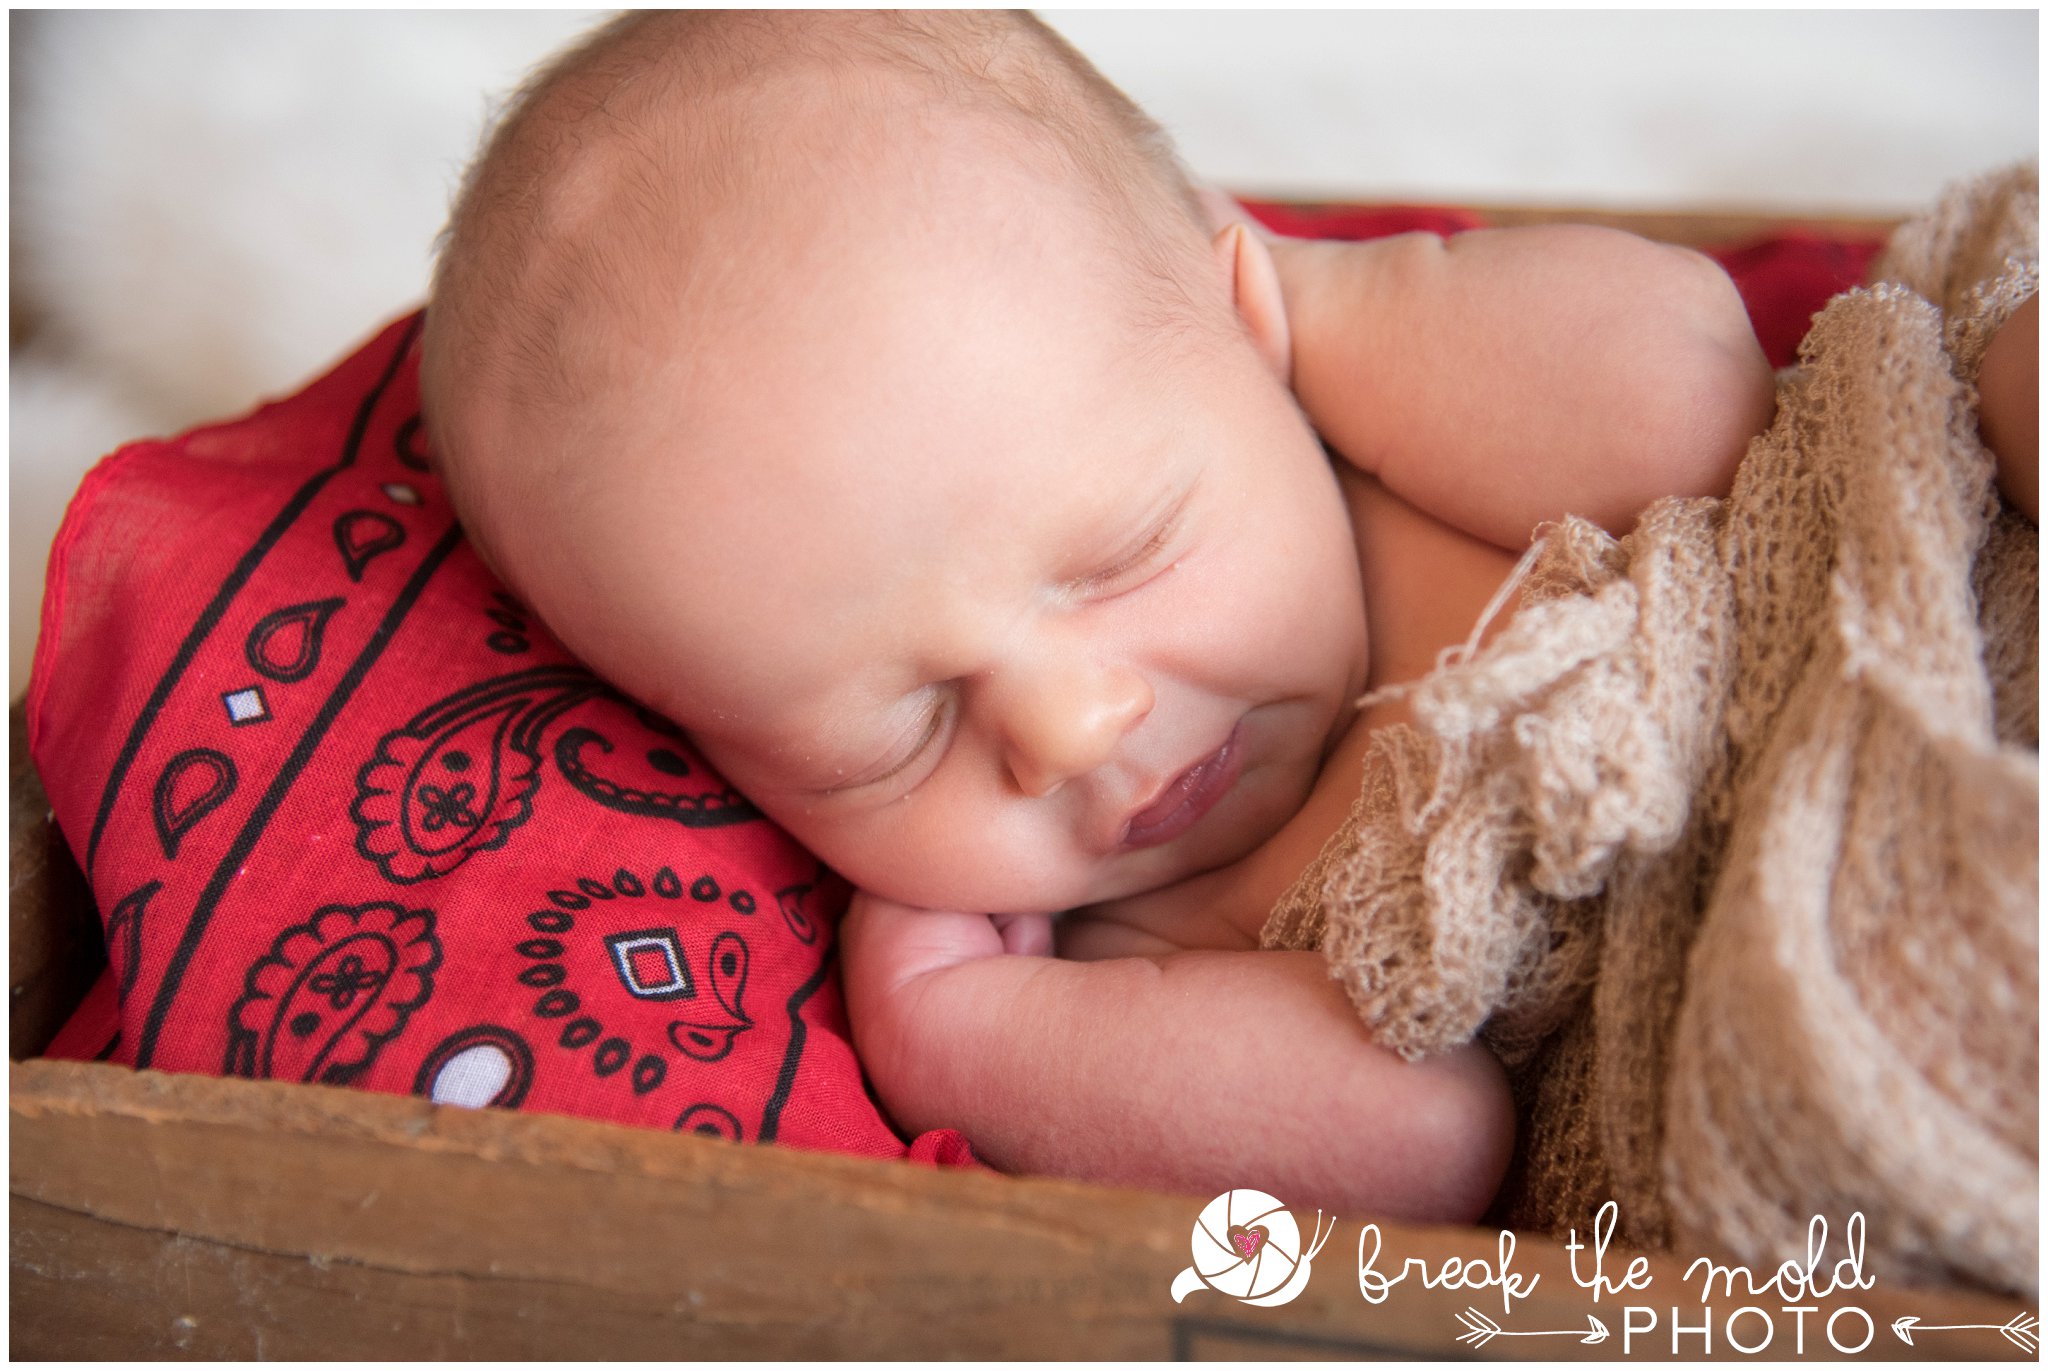 break-the-mold-photo-newborn-in-home-photos-nursery-lifestyle_1104.jpg